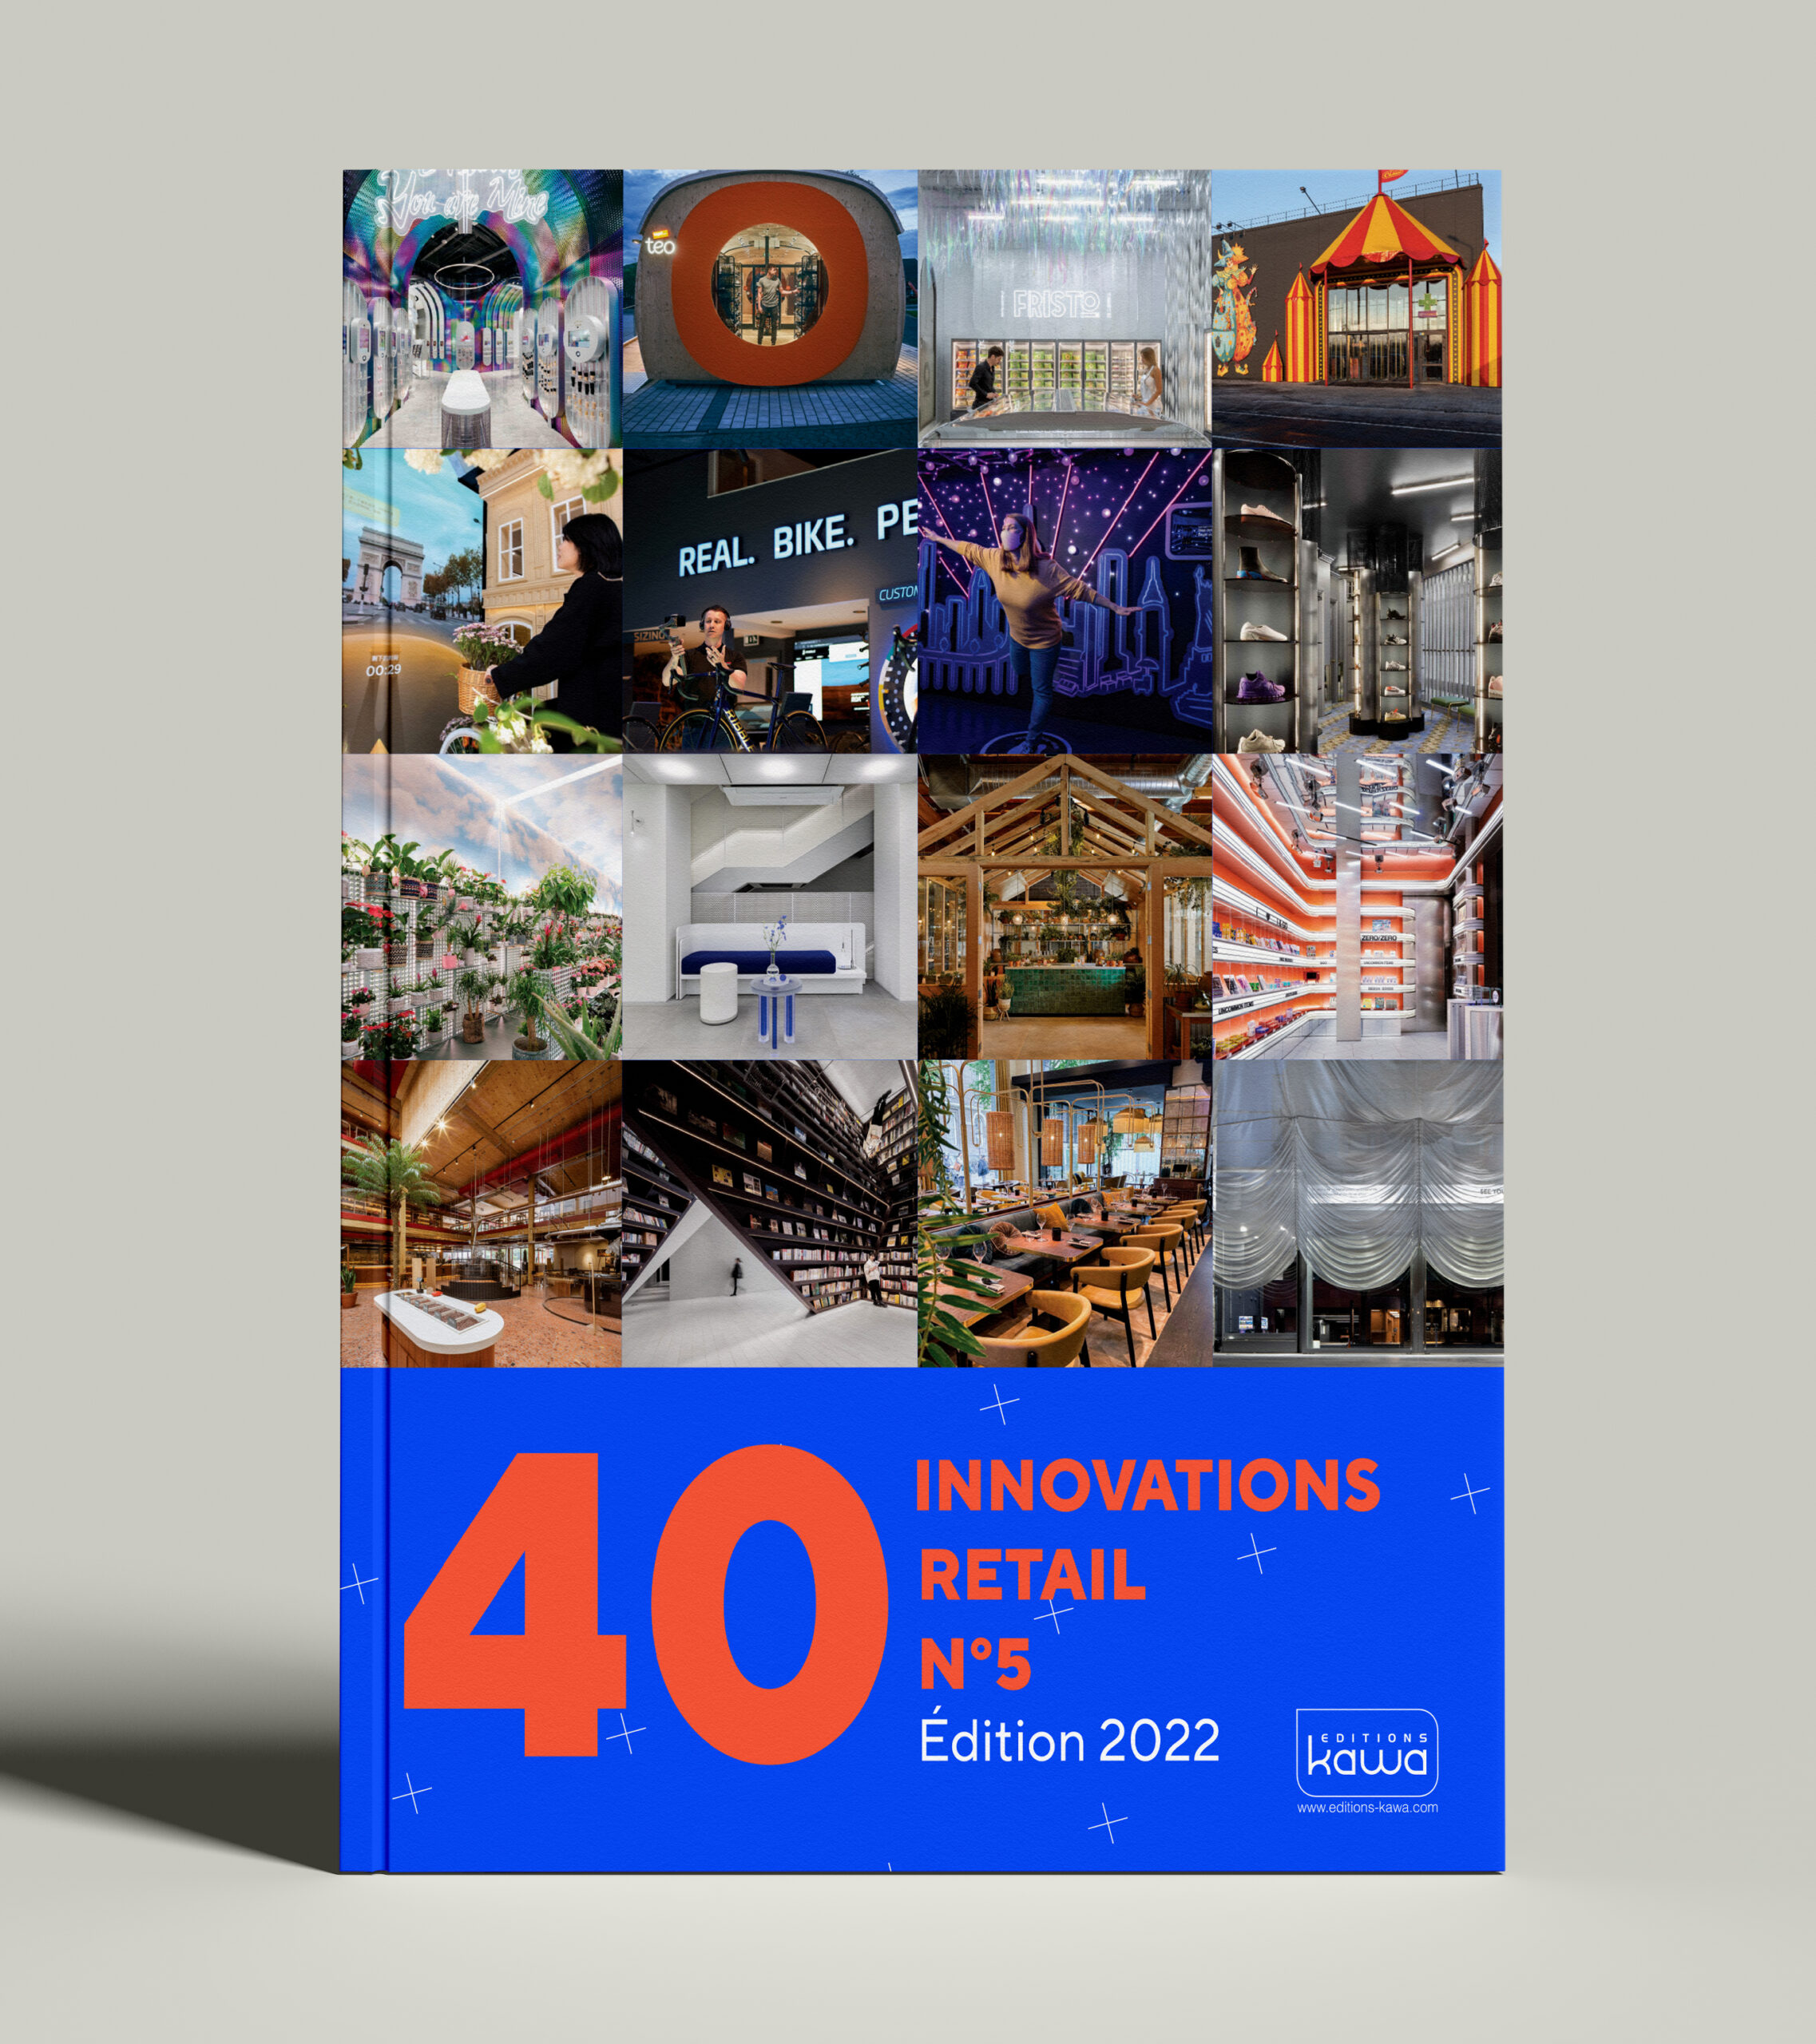 40 innovations retail N°5